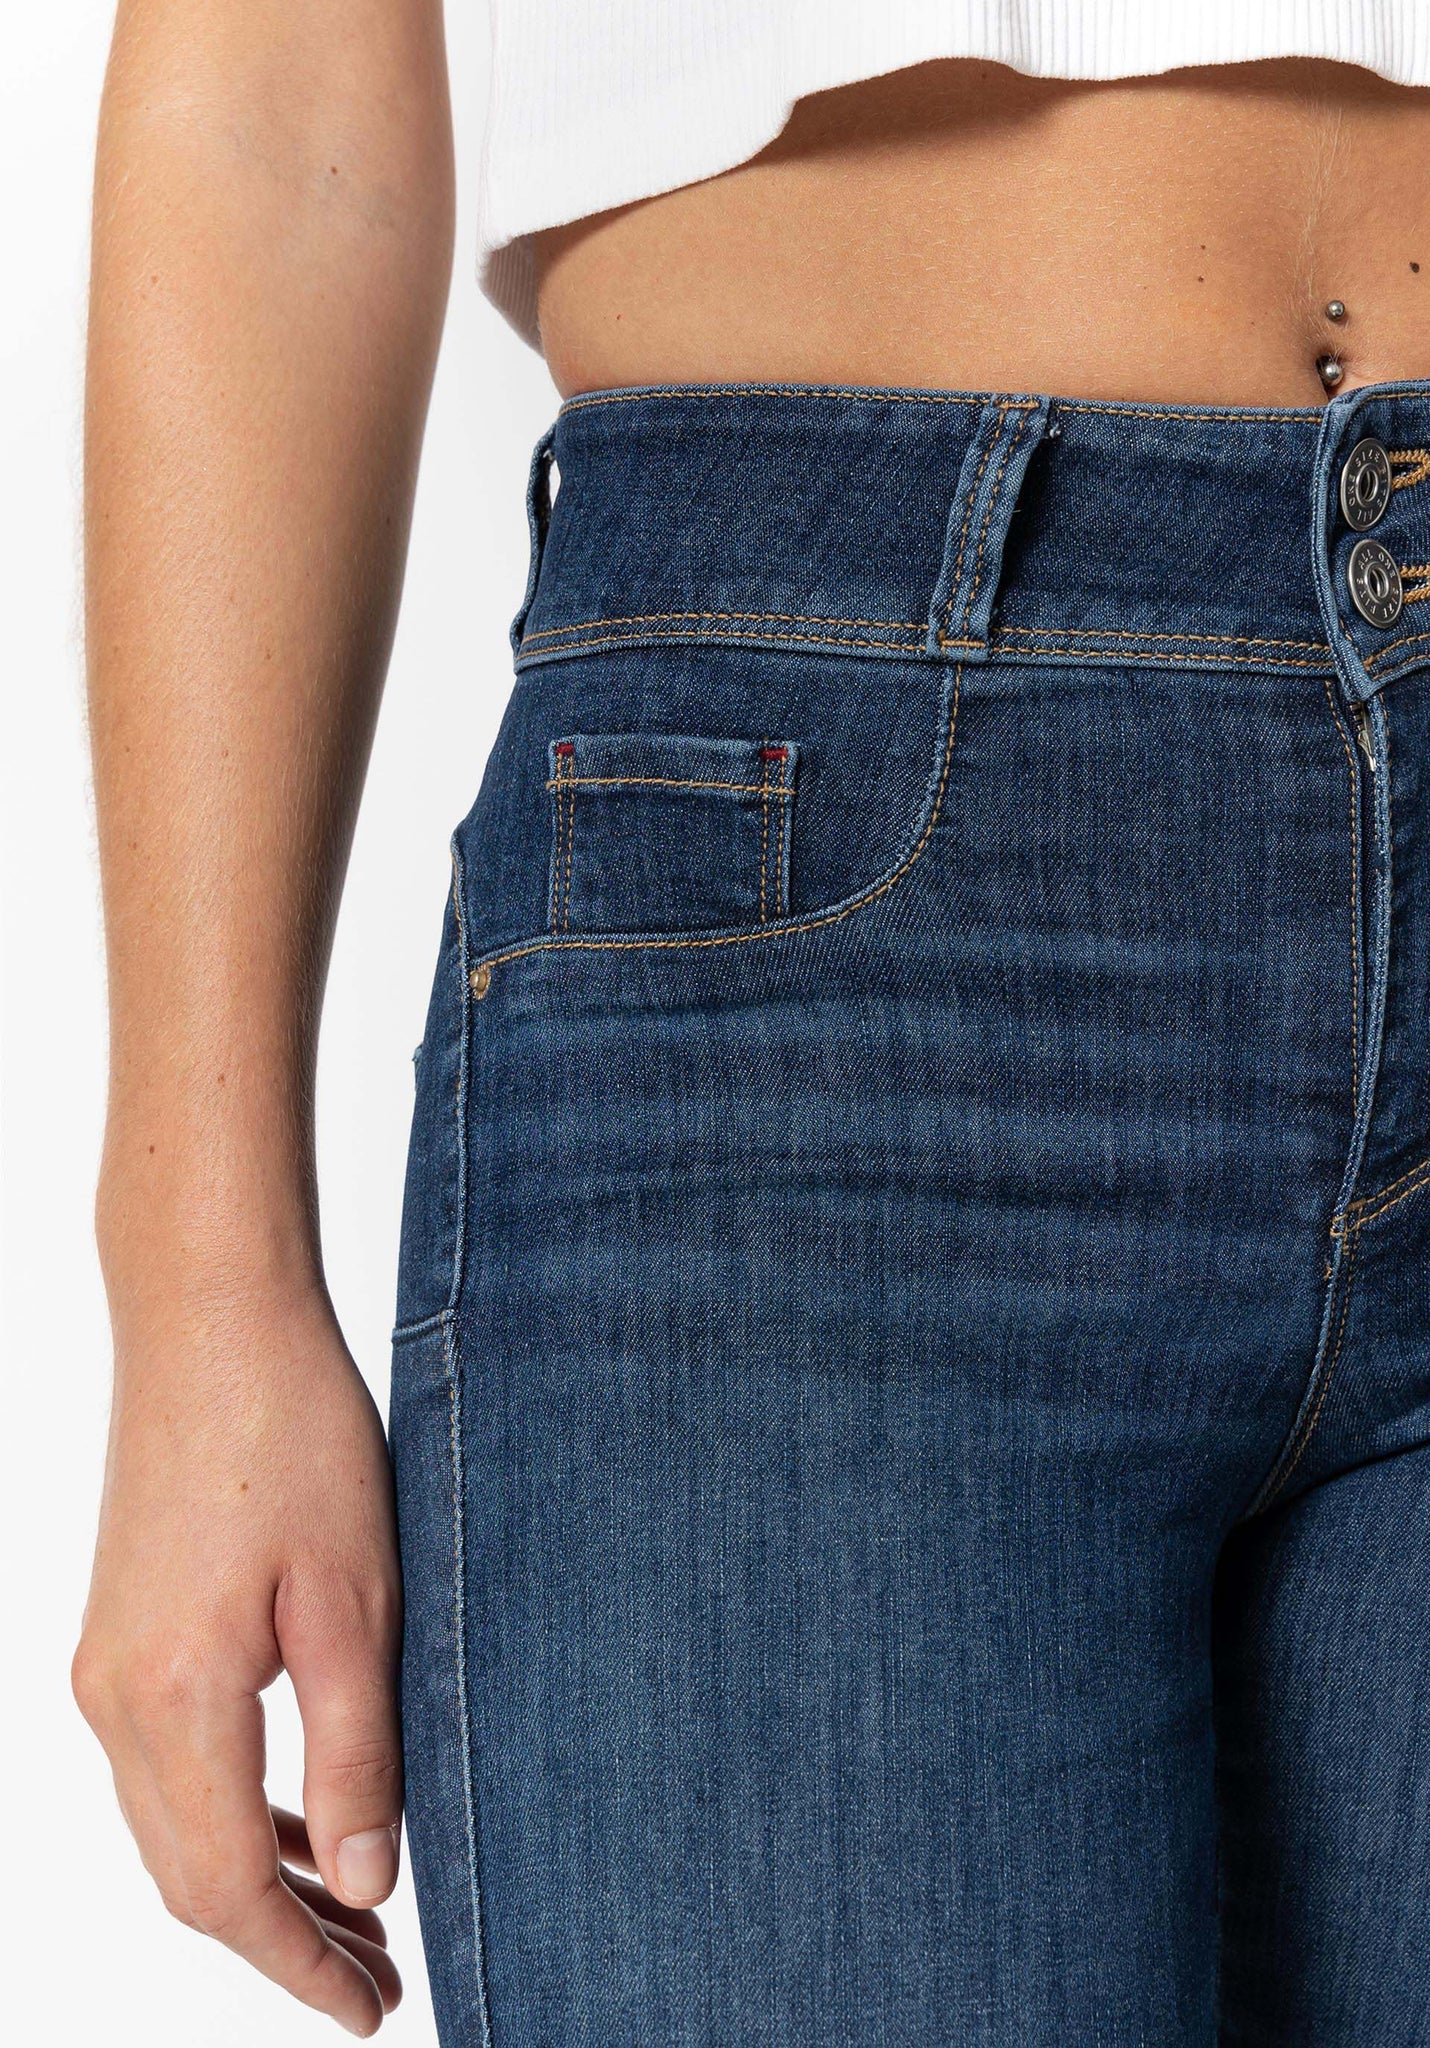 Tiffosi Silhouette Jeans Einheitsgröße